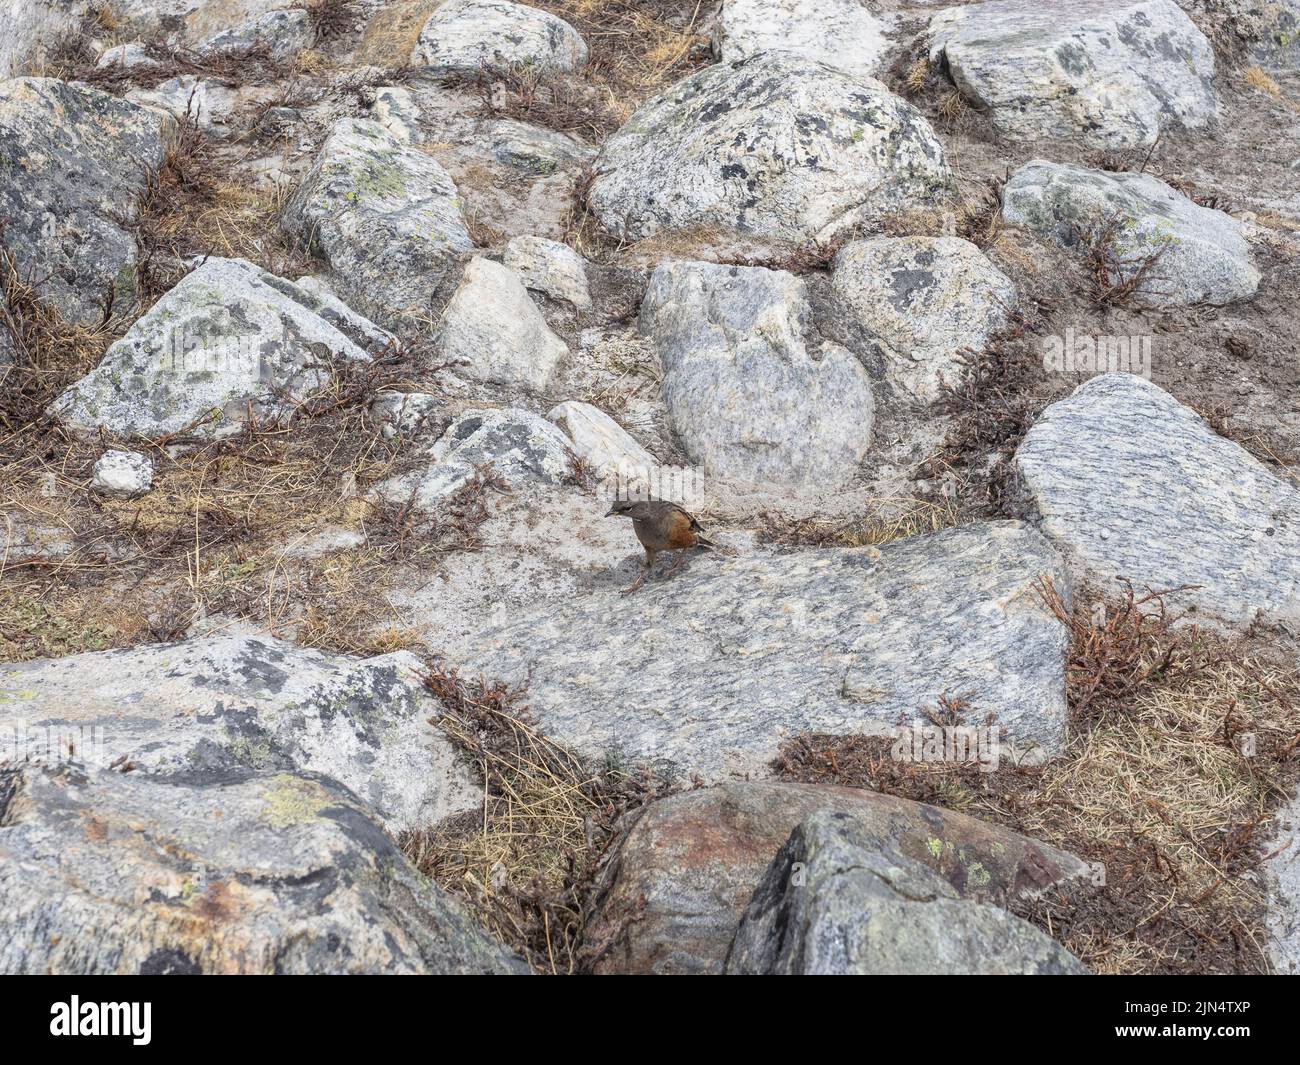 Alpine accentor (Prunella collaris)  on rocky ground, Lobuche, Khumbu Stock Photo